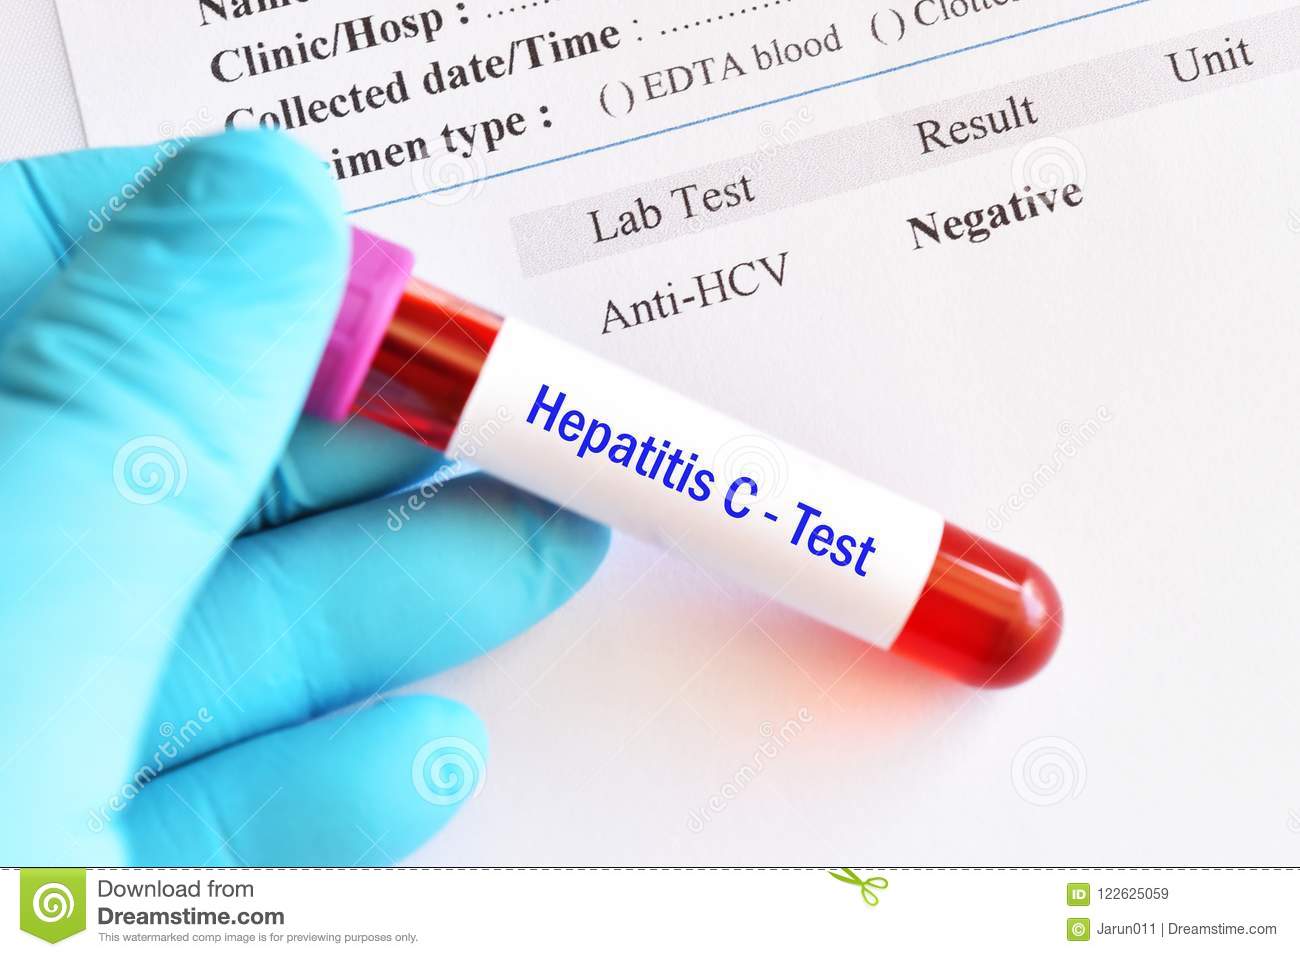 Hepatitis C Virus Negative Test Result Stock Image